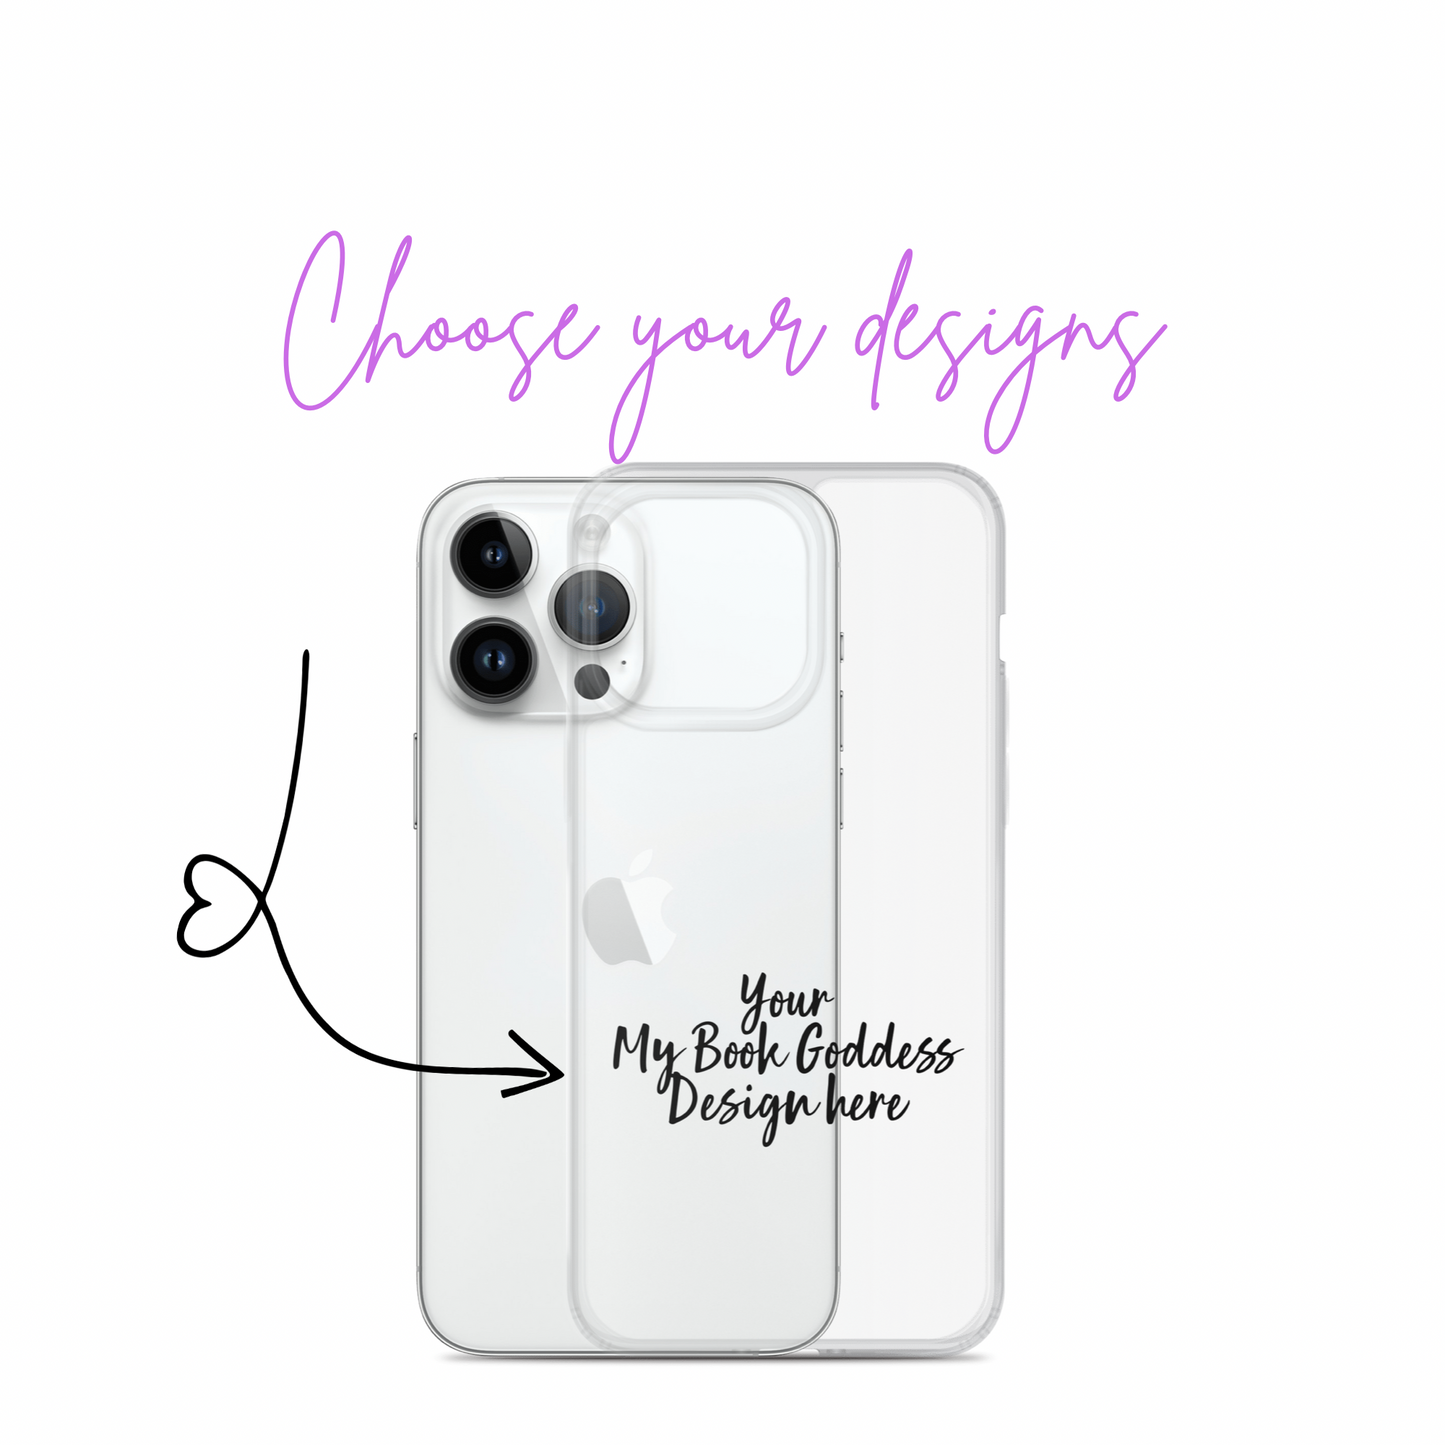 Choose your design- iPhone Case